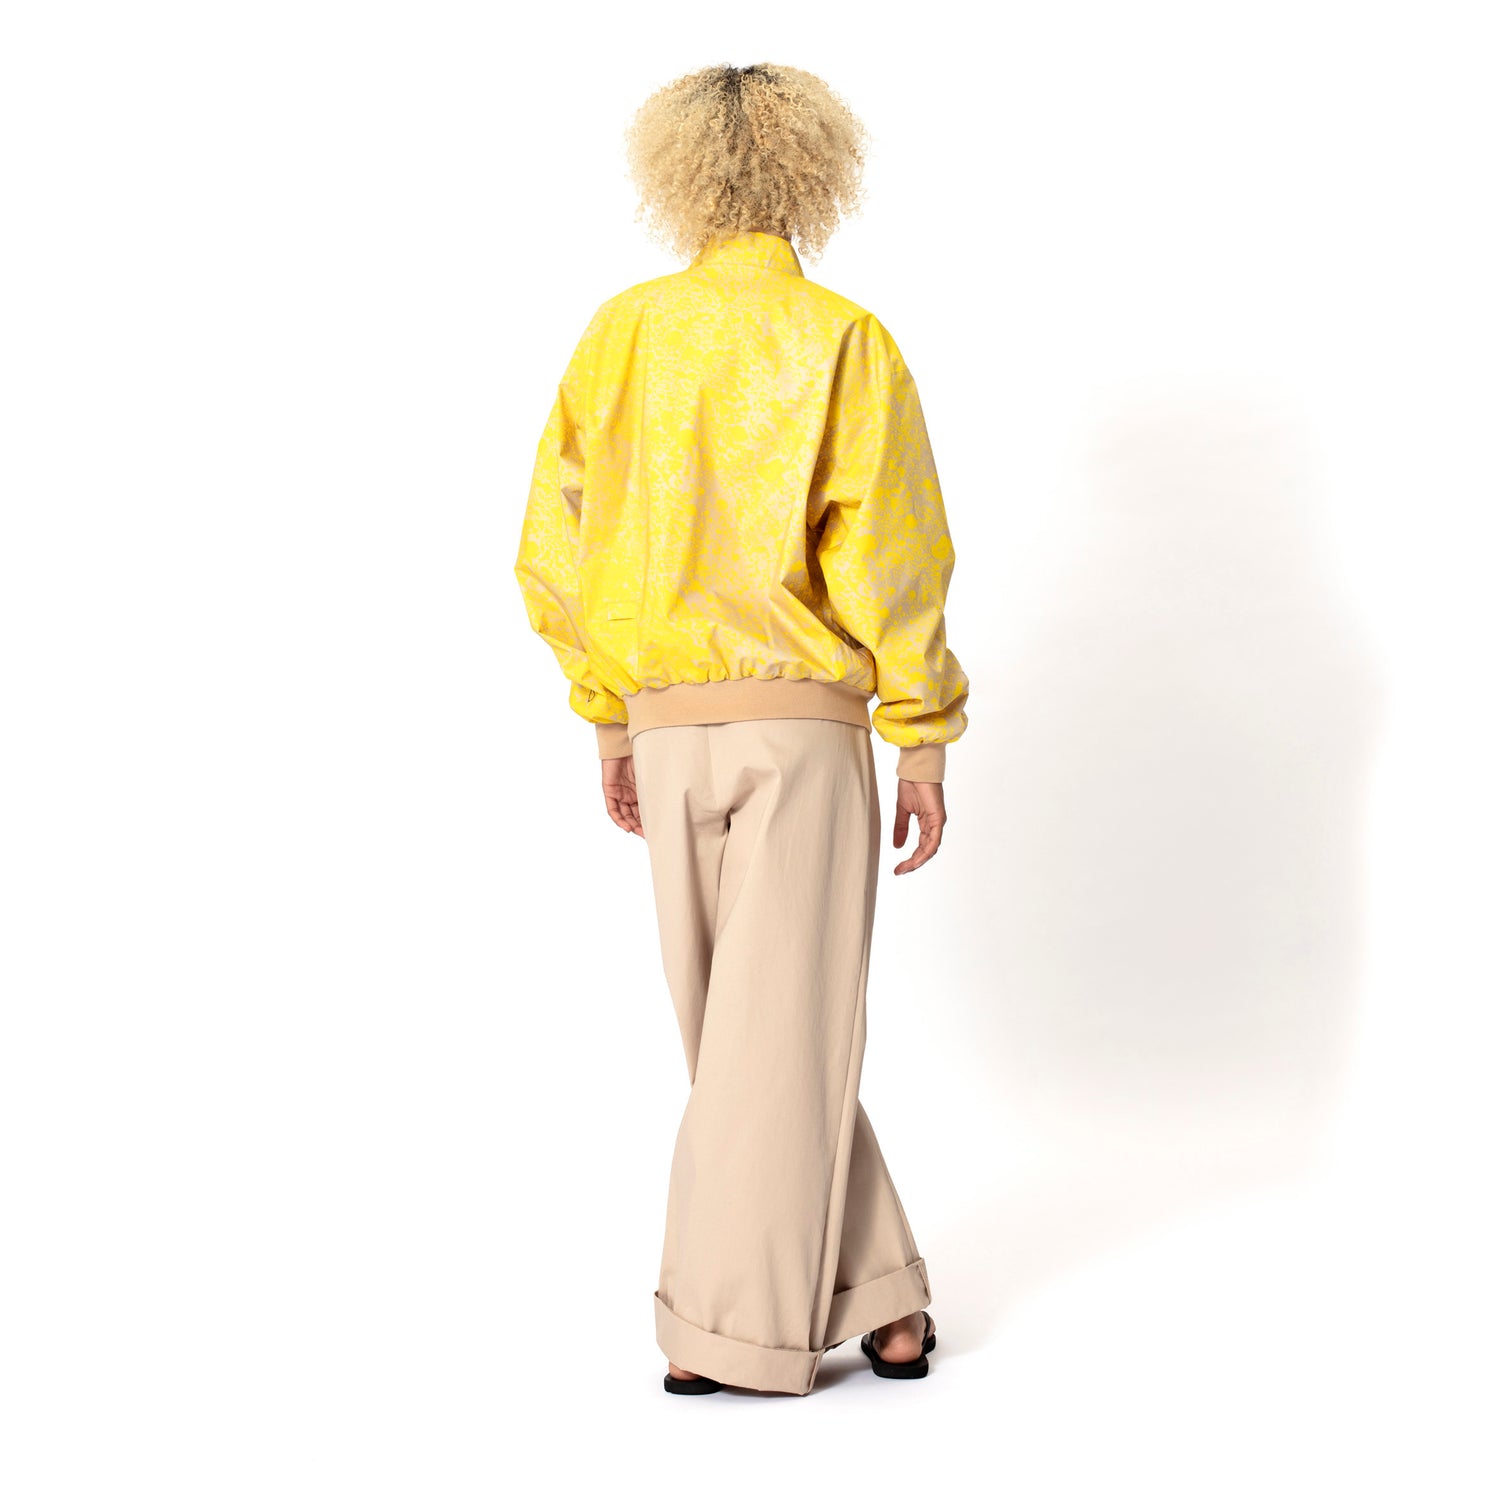 GOFRANCK-TROPICS-Product-Image-women-rainjacket